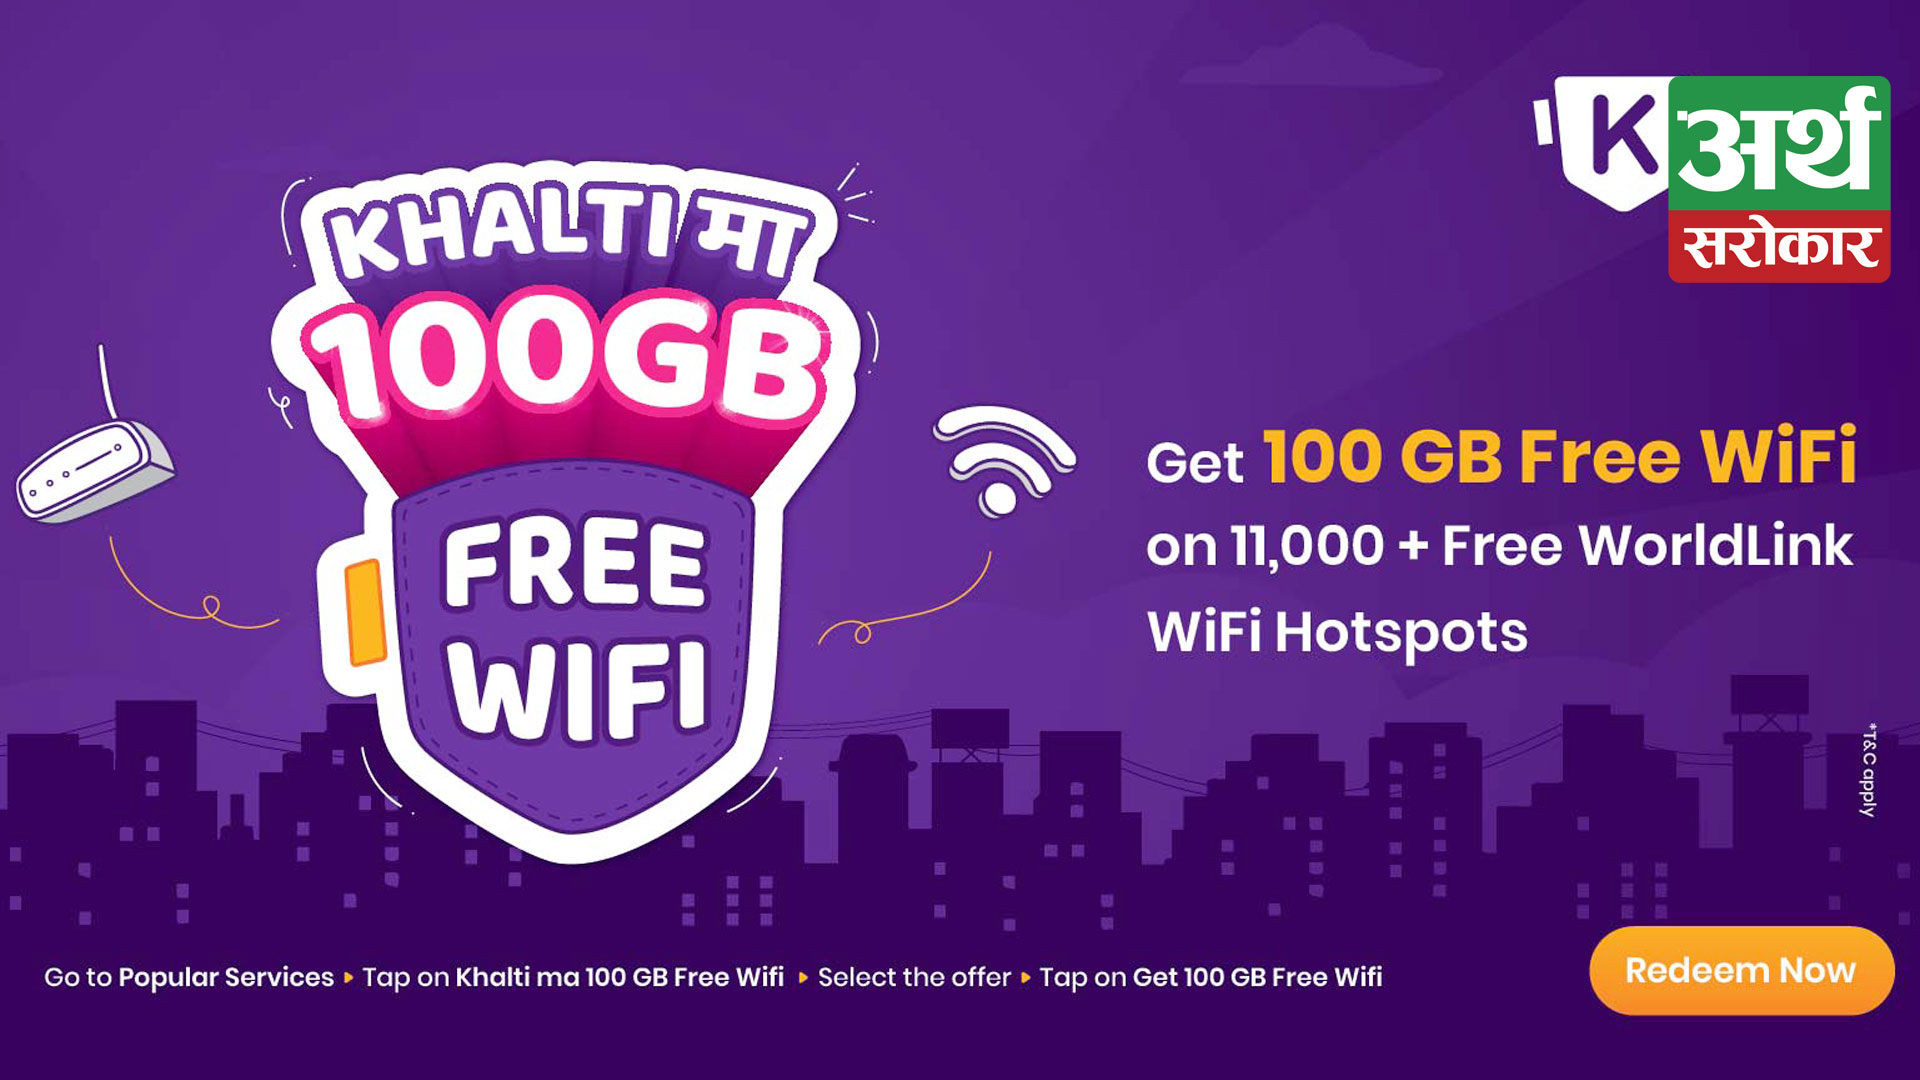 Khalti users get 100 GB Free WiFi on WorldLink’s Free WiFi hotspot